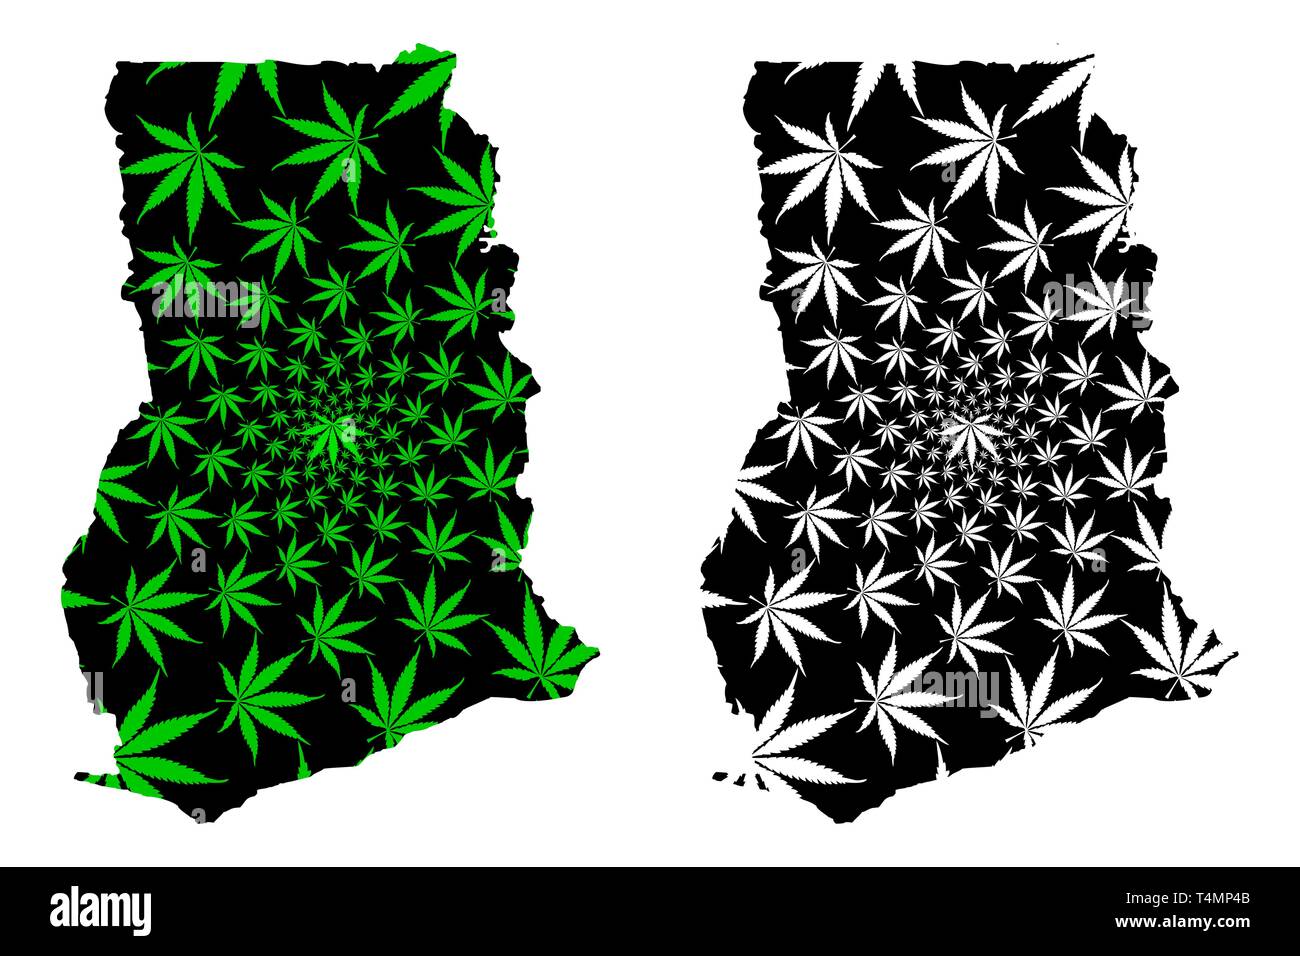 Ghana - map is designed cannabis leaf green and black, Republic of Ghana map made of marijuana (marihuana,THC) foliage, Stock Vector